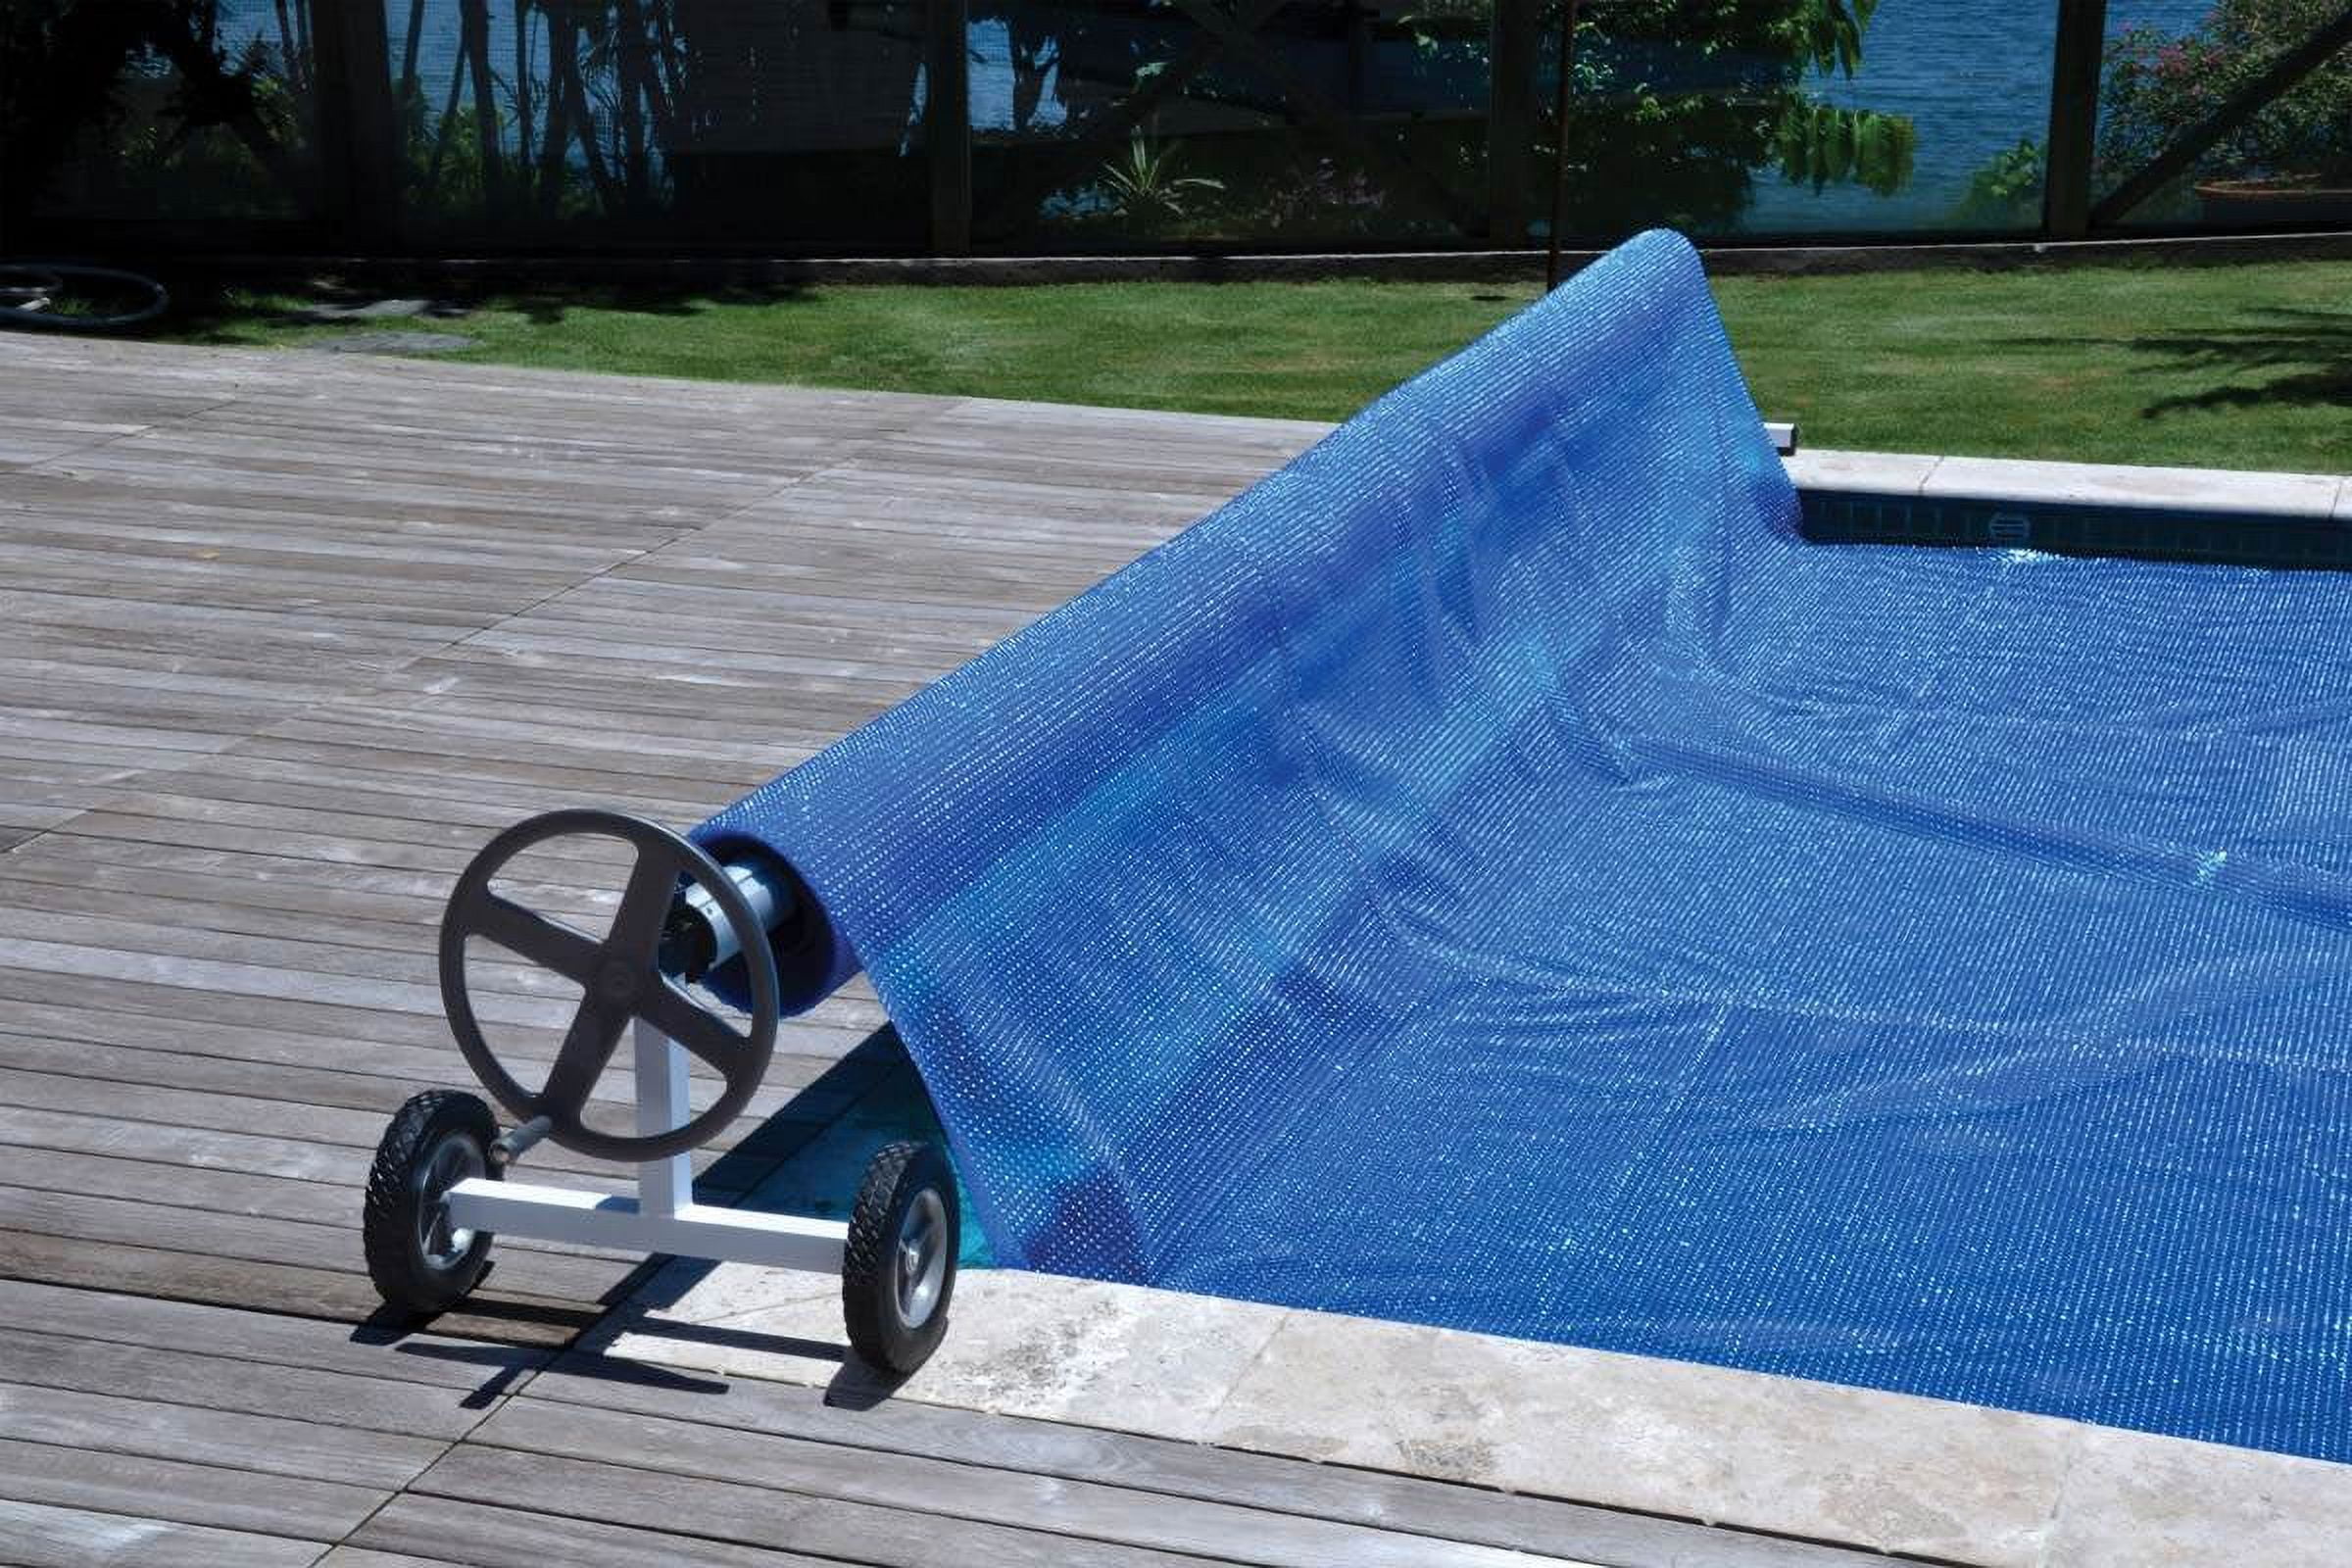 Kokido Kalu Aluminum Swimming Pool Cover Reel (Up to 21.1 ft